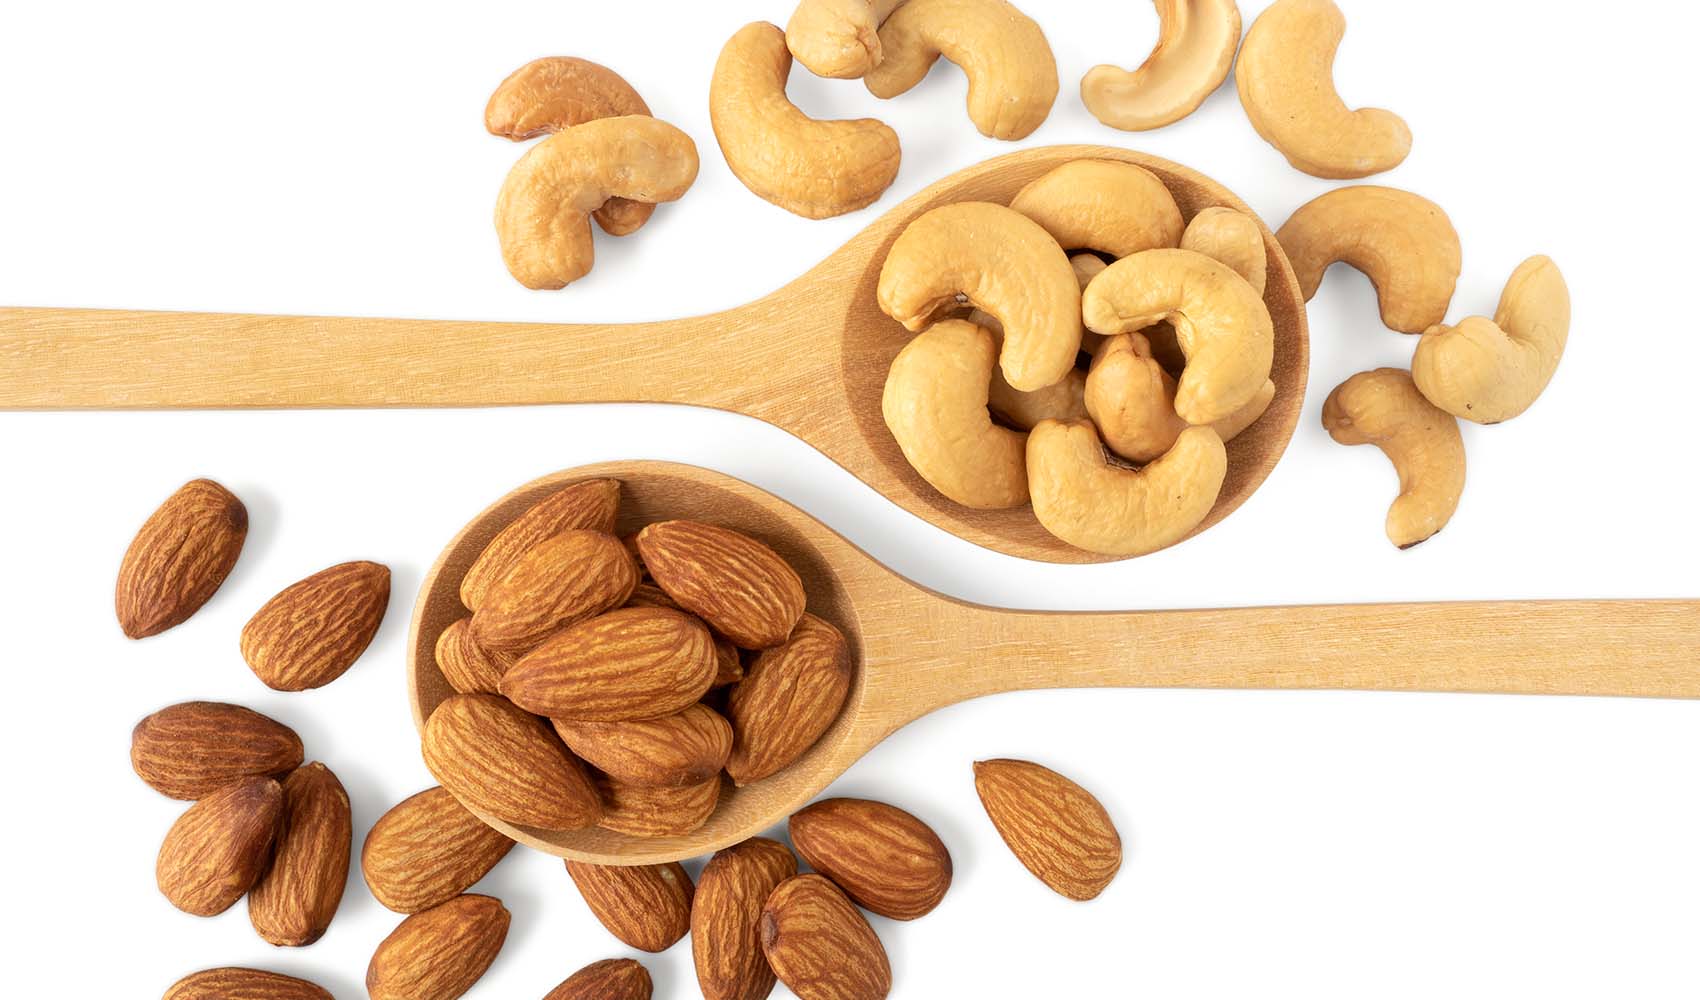 almond-vs-cashew-nutritional-comparison-1